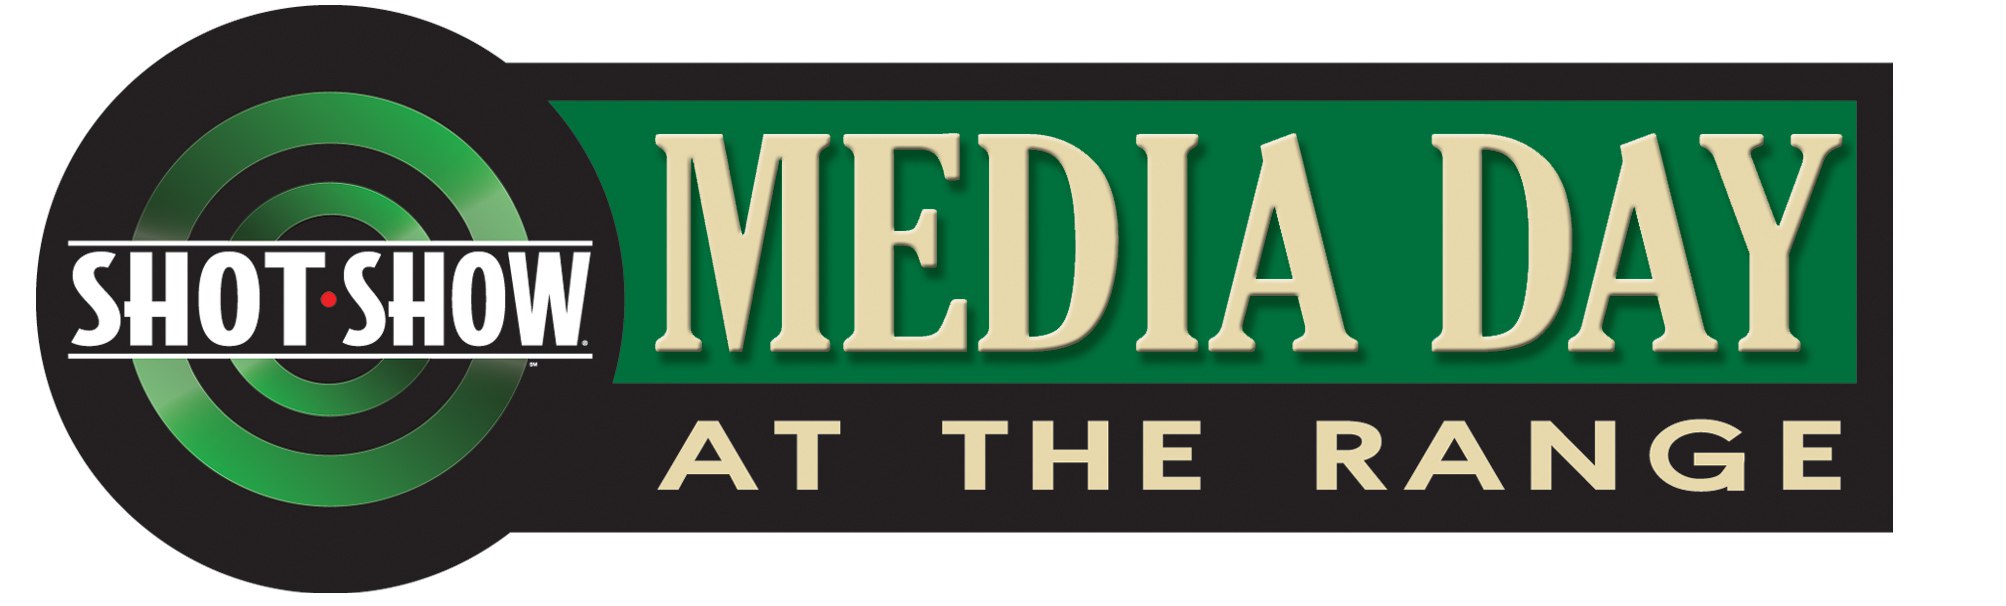 SHOT Show Media Day at the Range logo